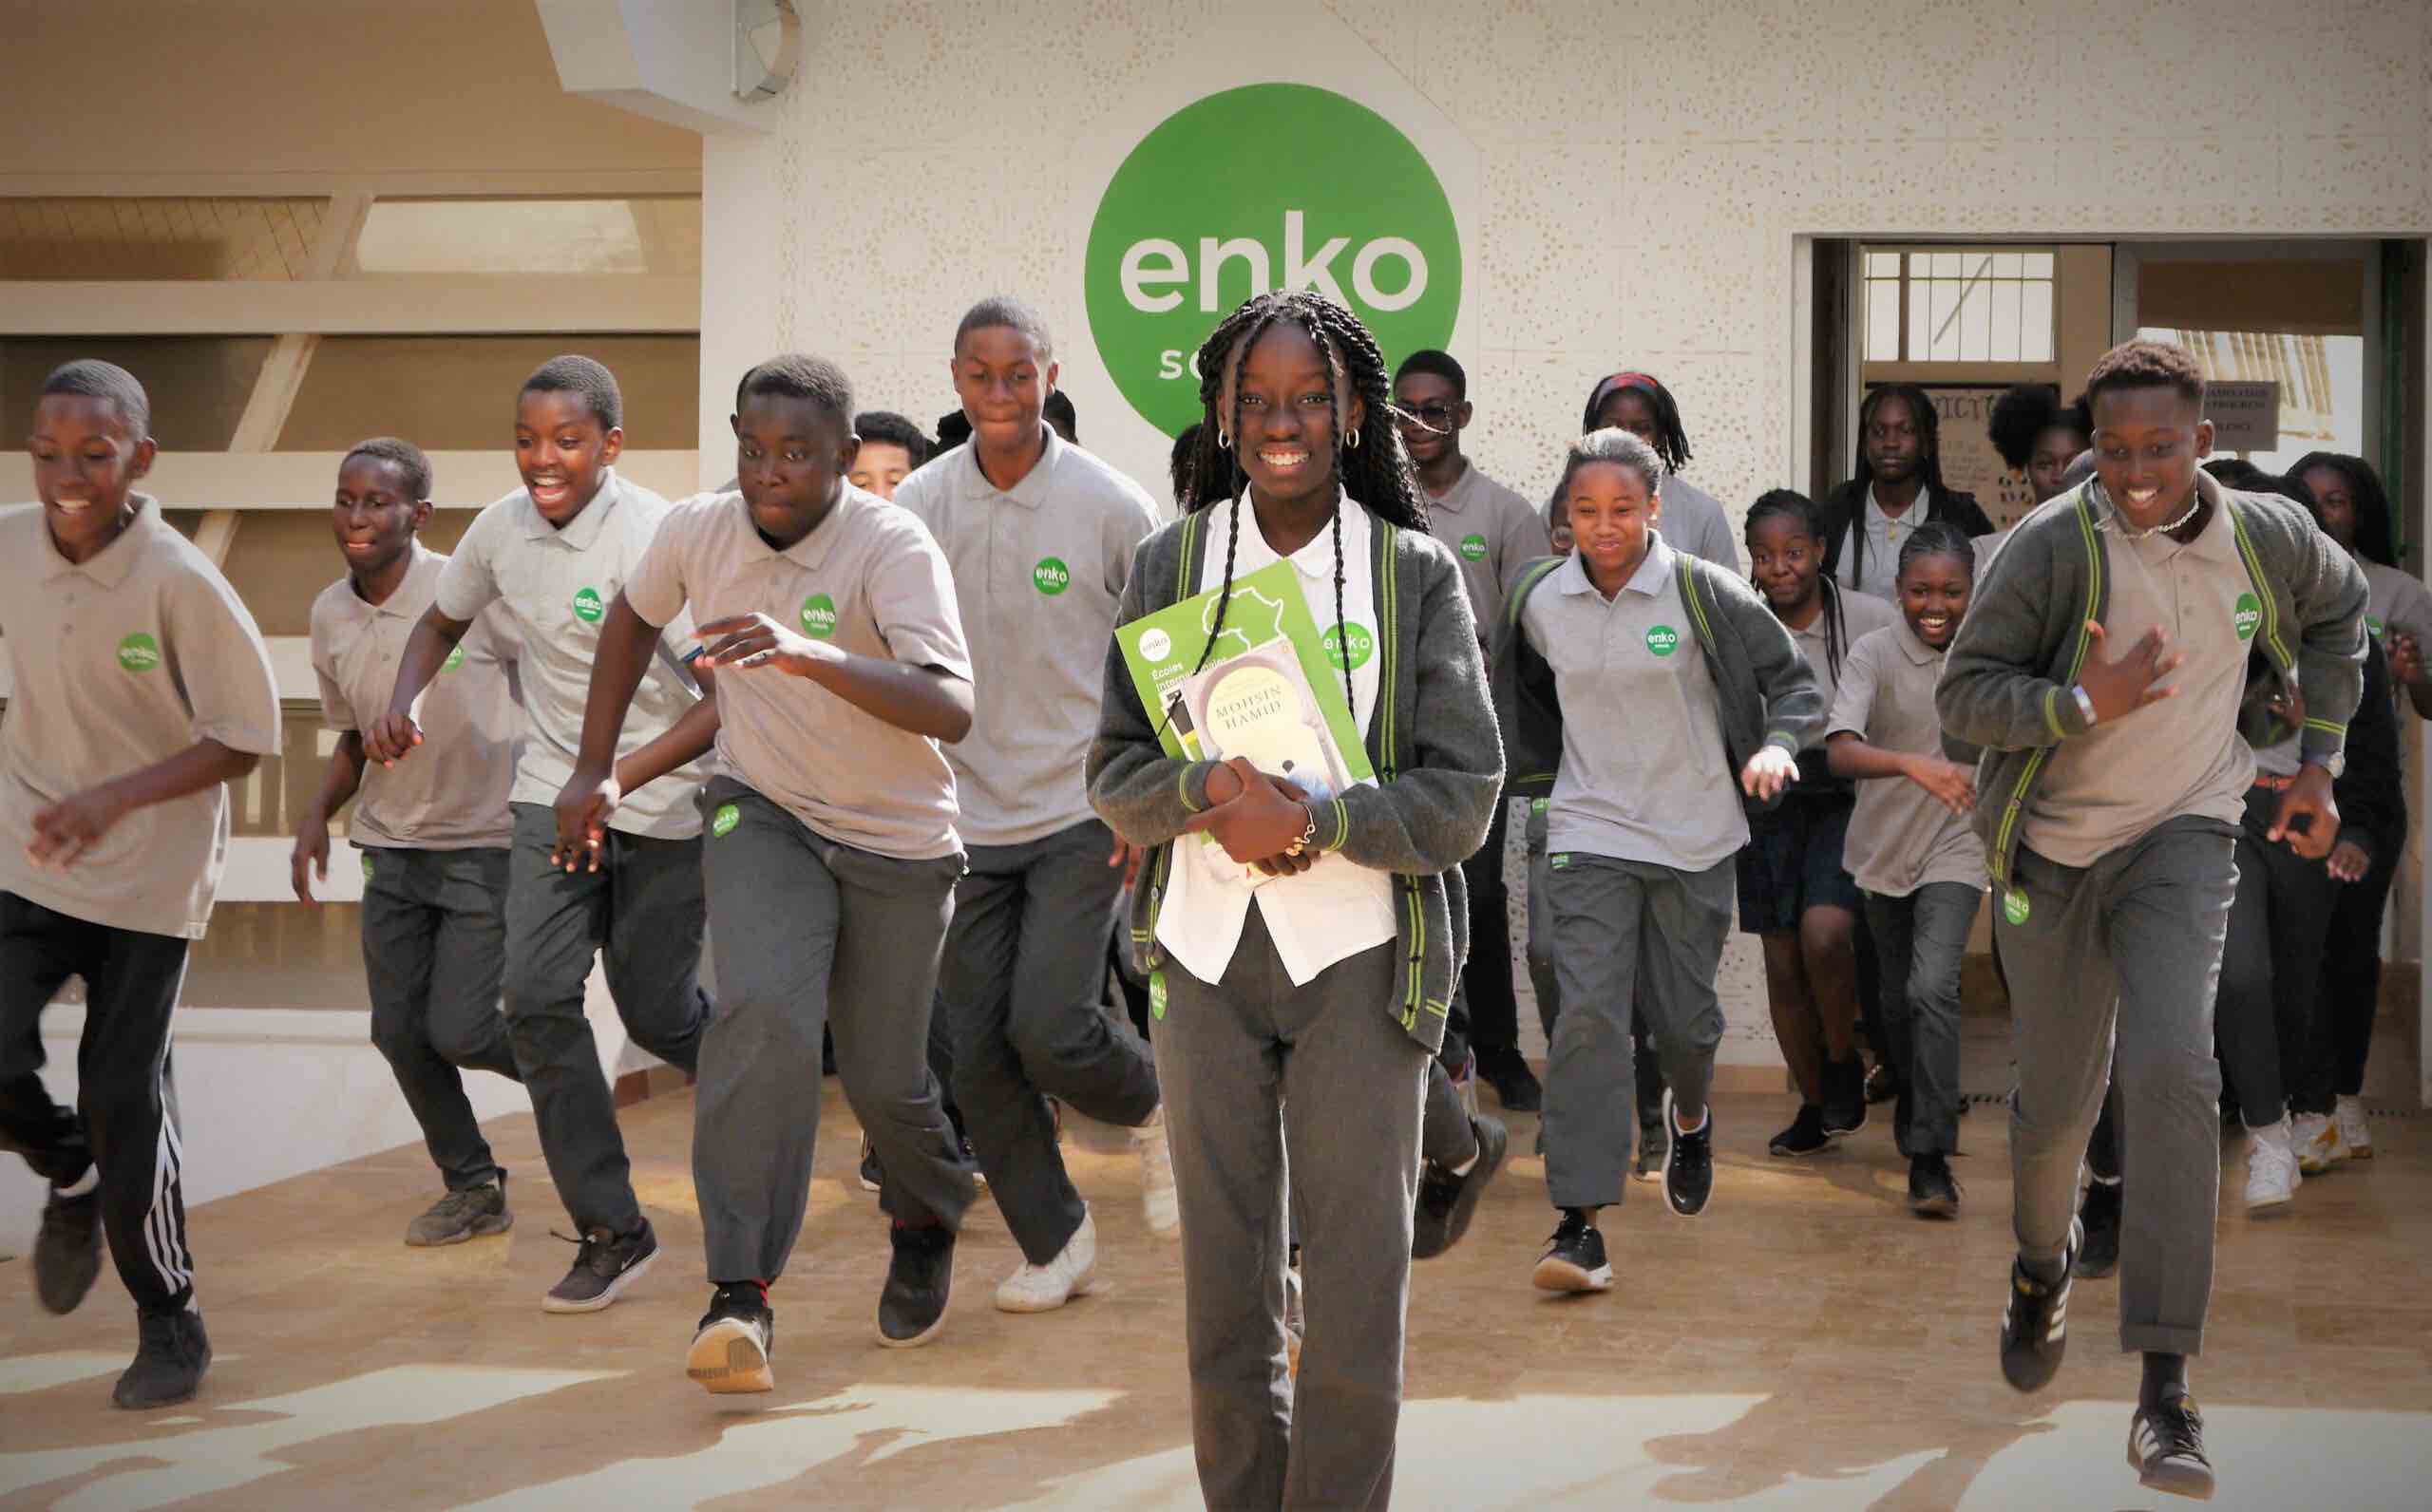 Enko Education South Africa